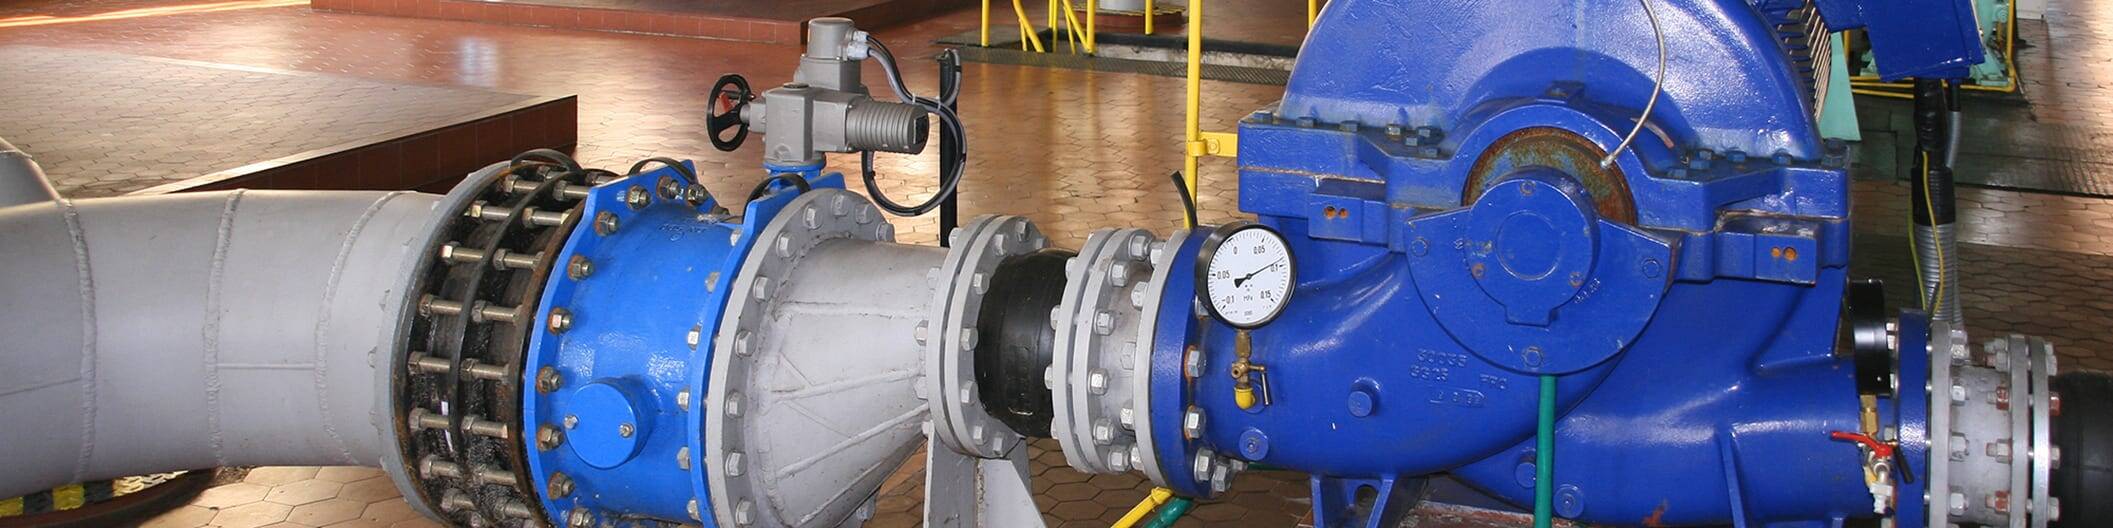 Utility Week Pump Supplement: pumps get smarter, greener and more efficient